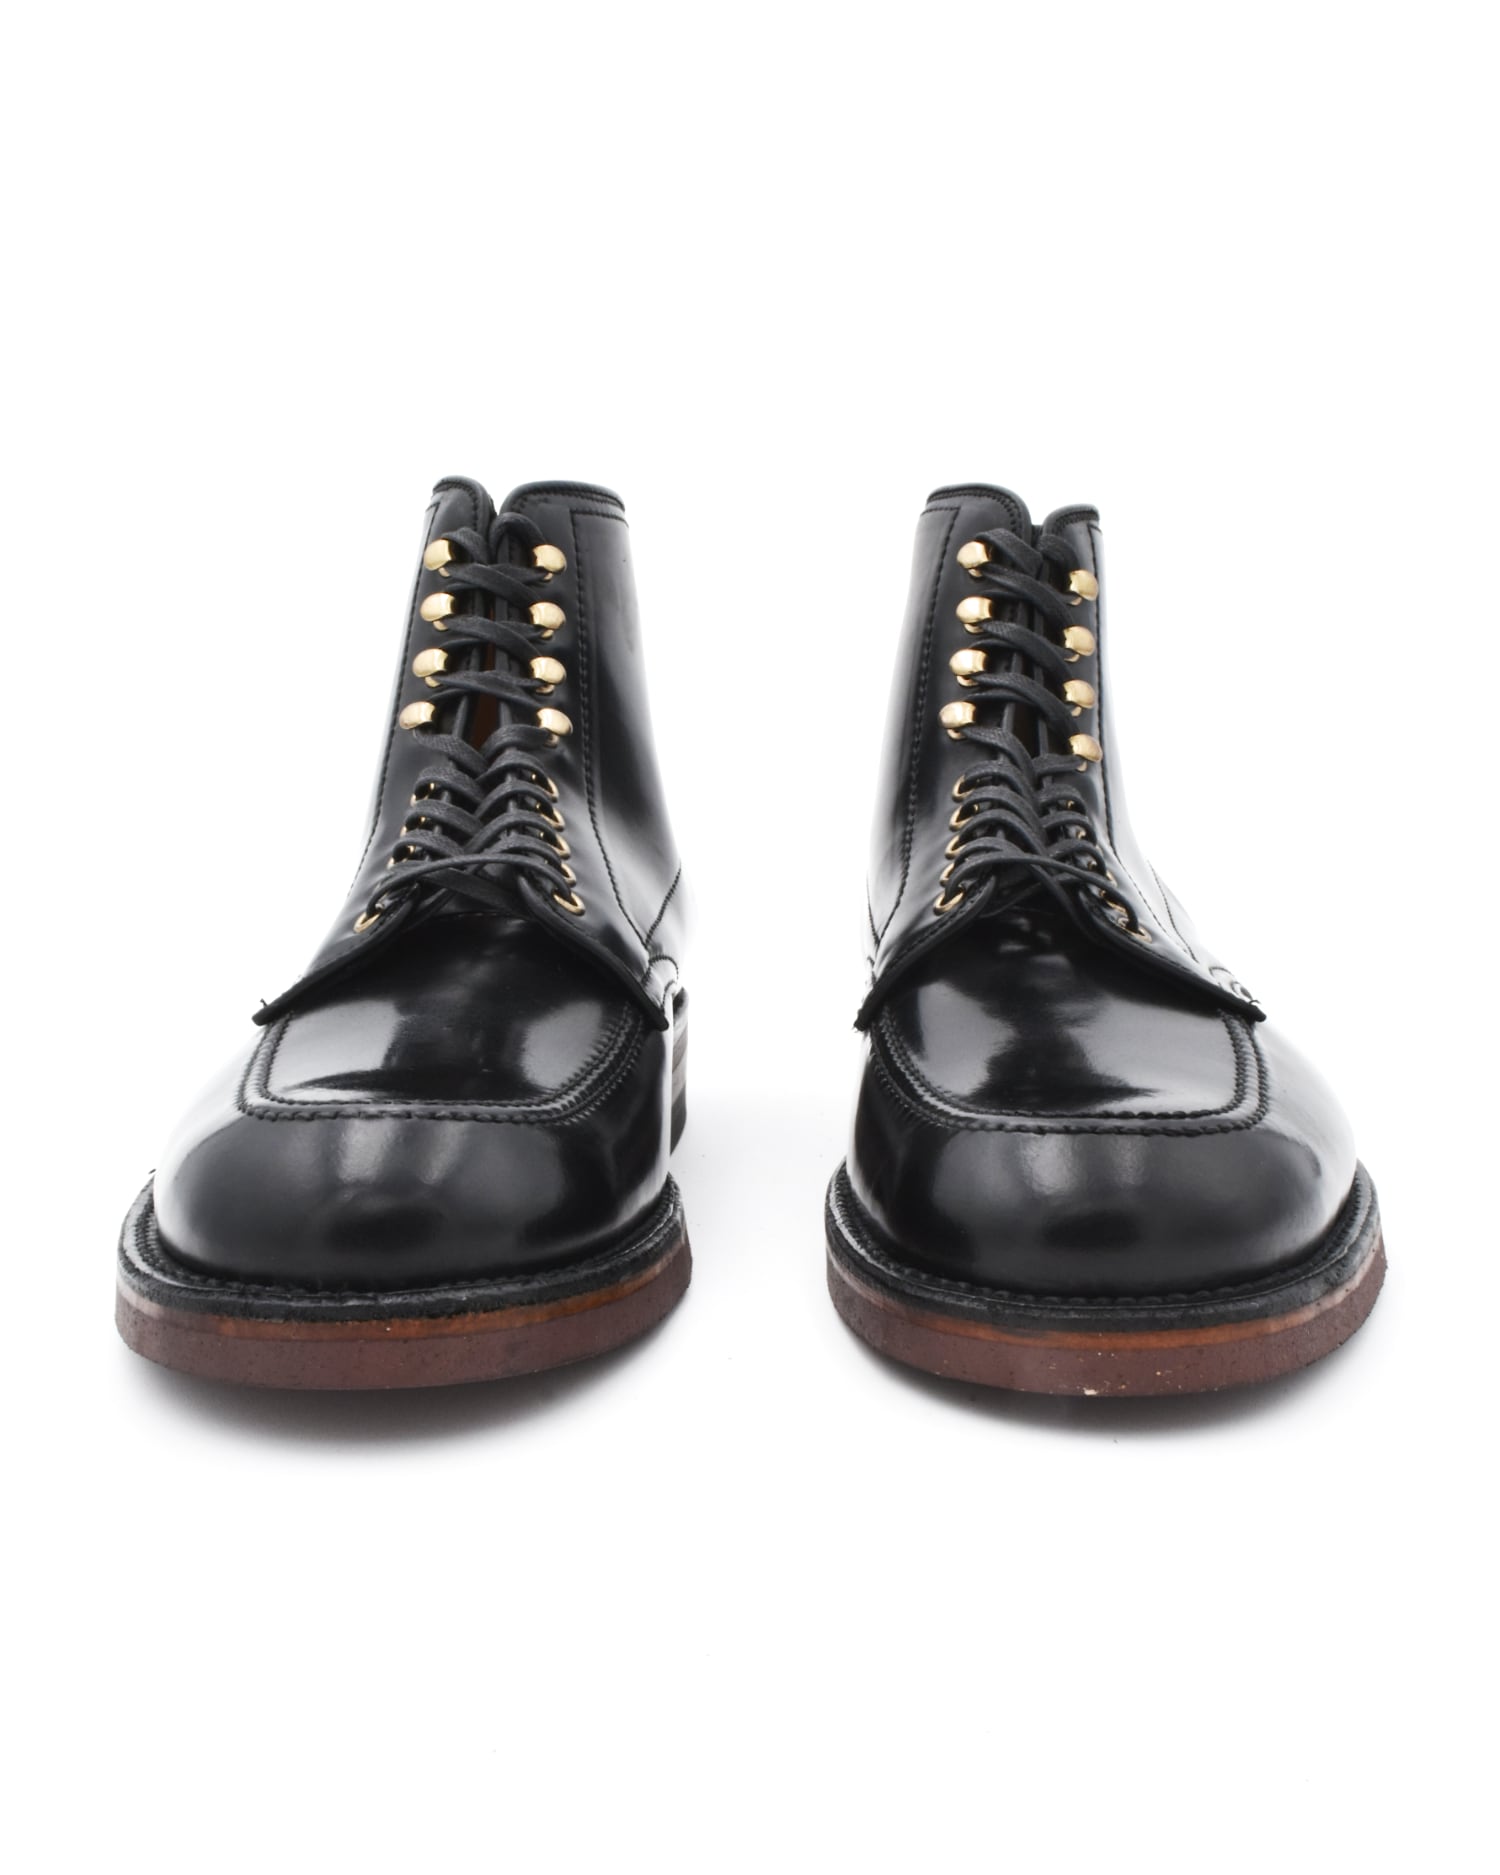 Alden Shoe Co. Black Cordovan Indy Boot